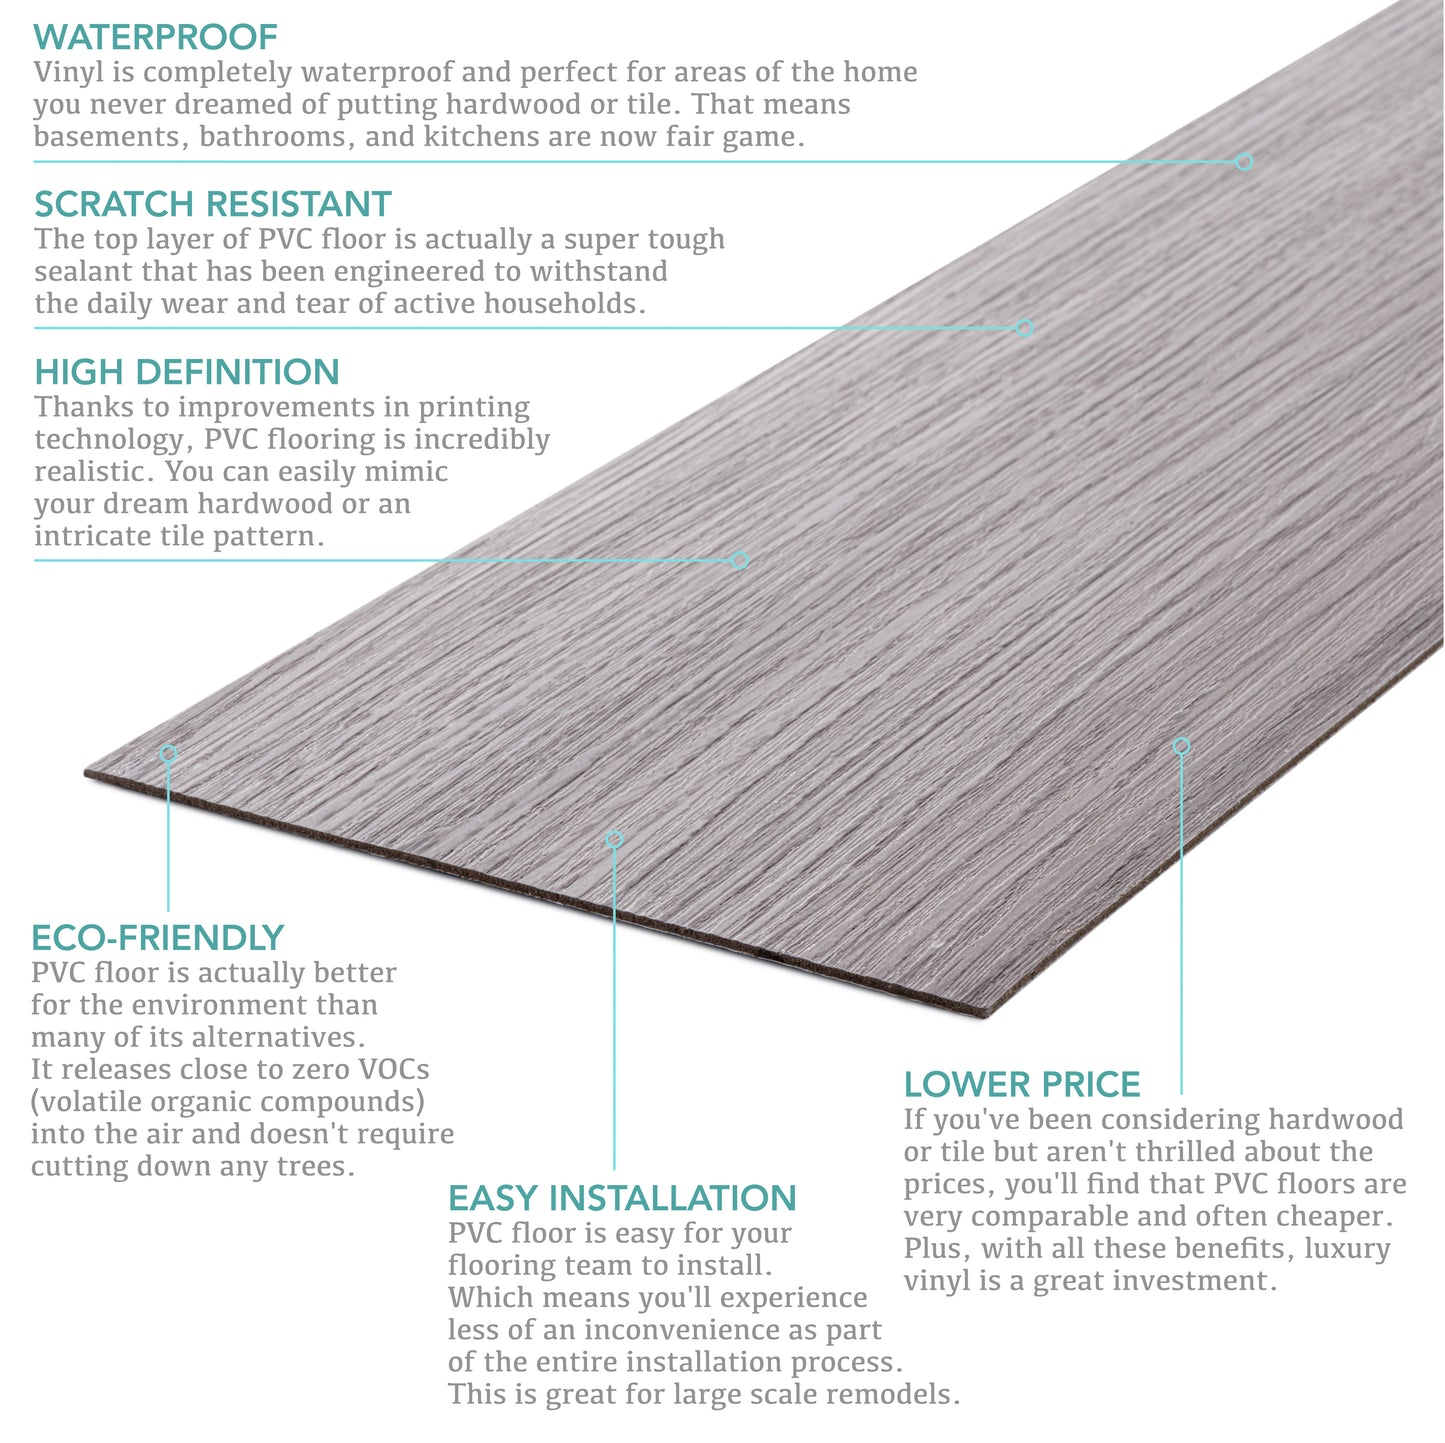 EasyFloor© 5m² Self Adhesive Floor Tile Vinyl Flooring Wood Effect Peel and Stick Tile 15X90cm 35pcs Wooden Flooring